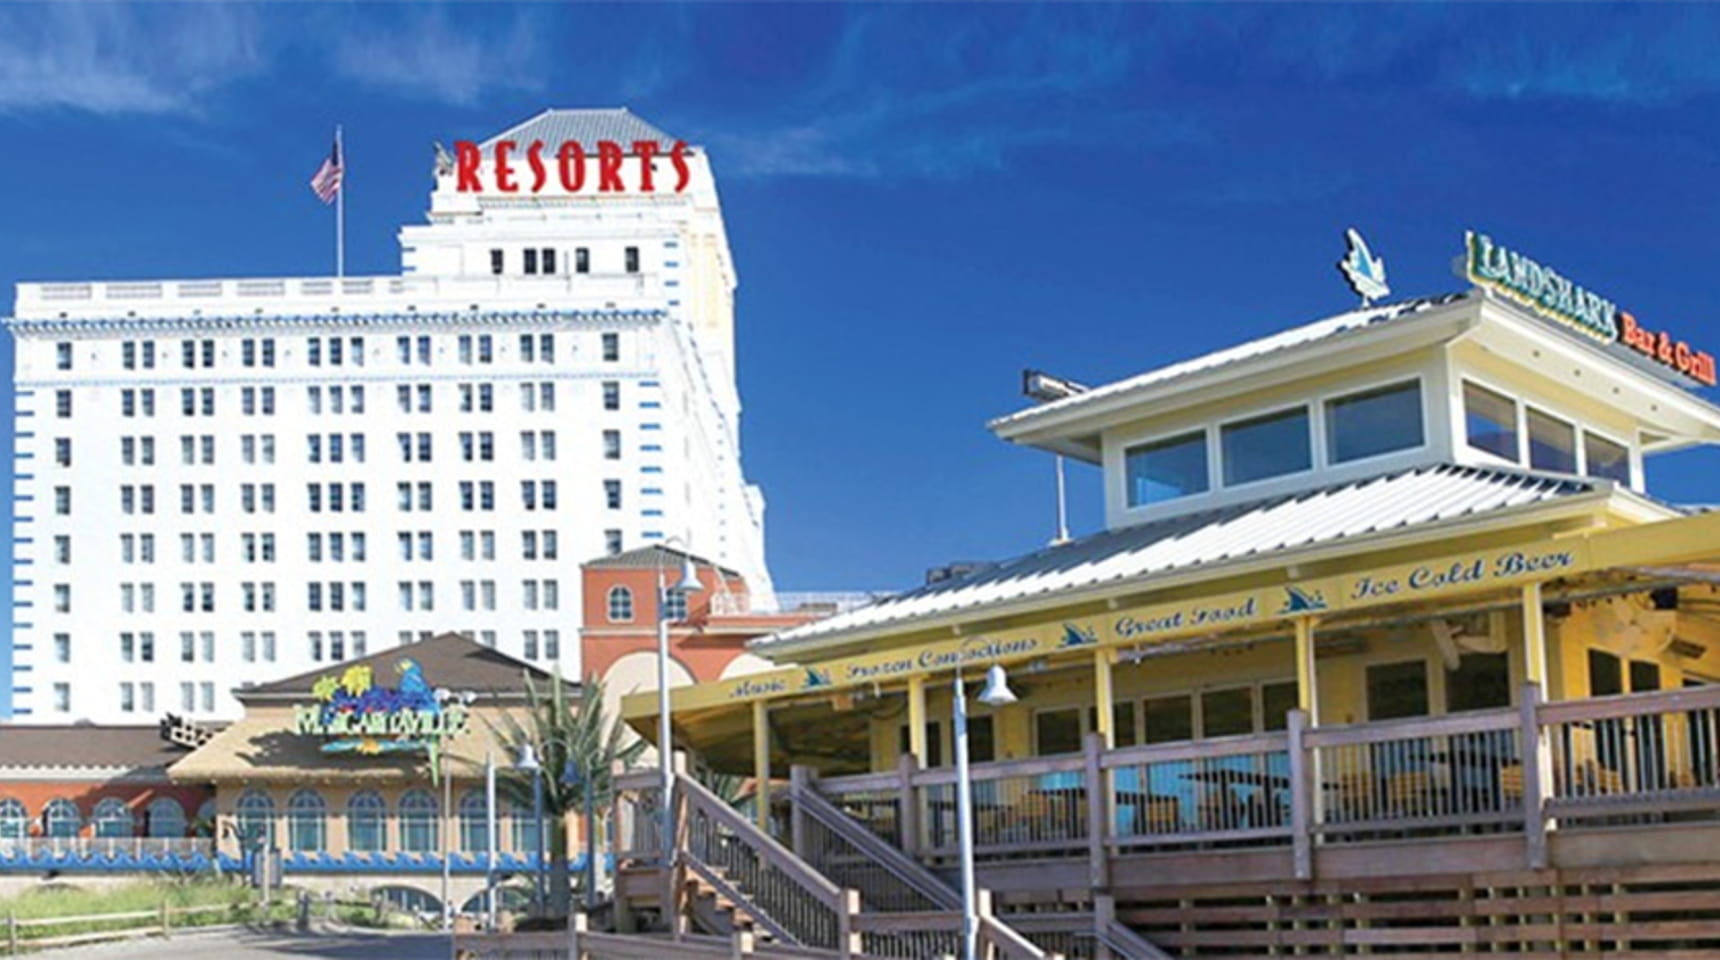 resorts casino hotel in atlantic city